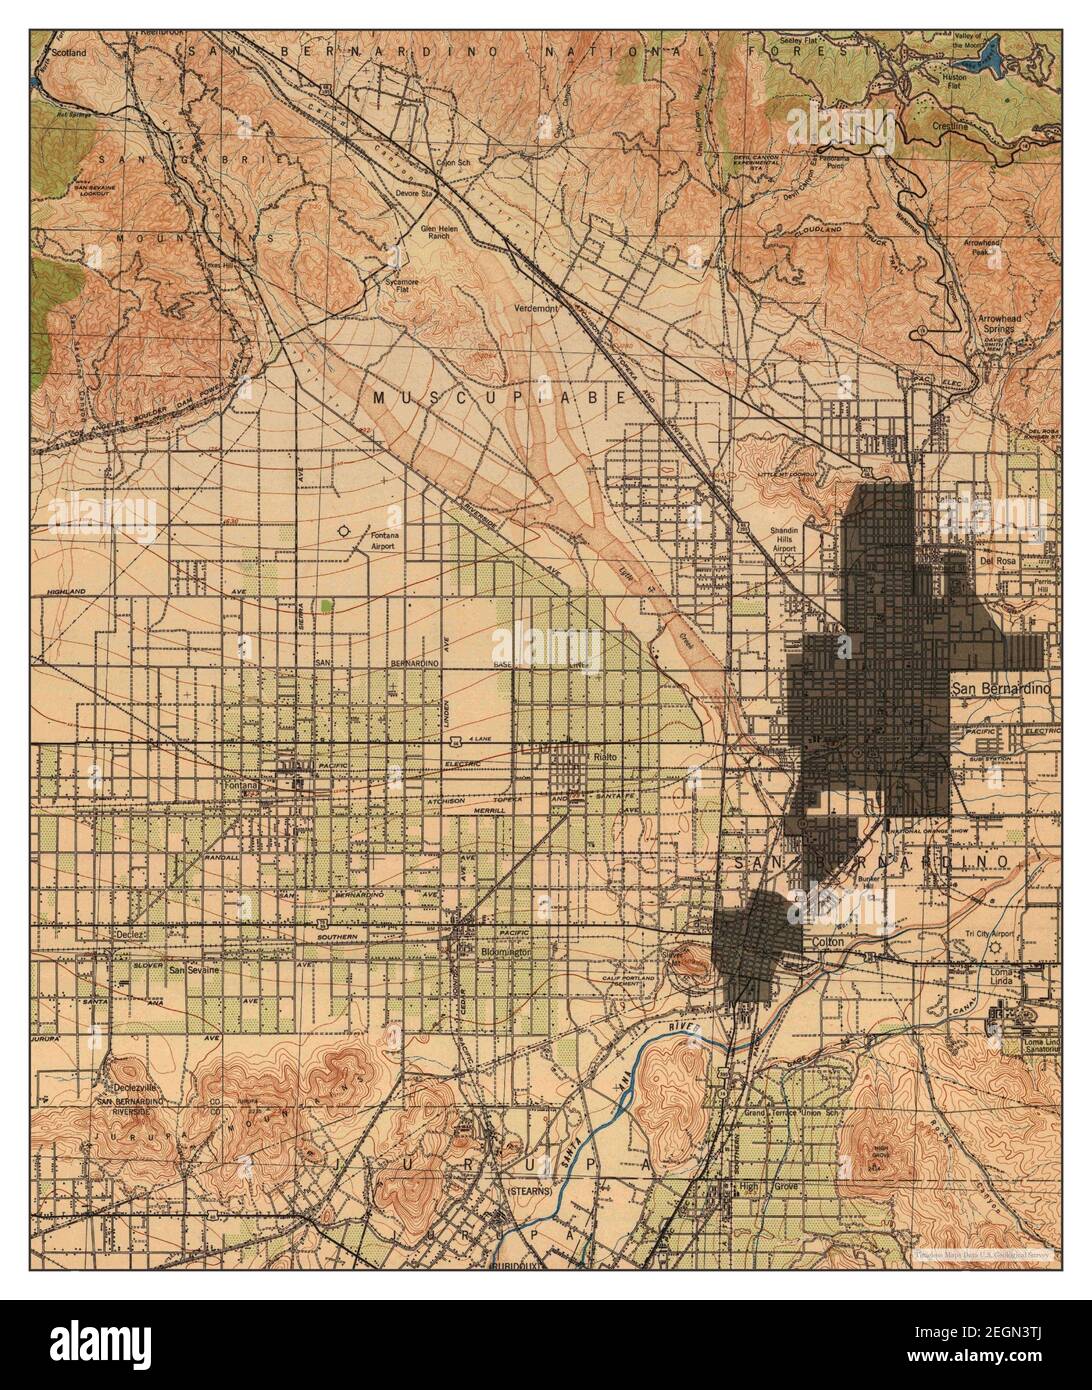 San Bernardino, California, map 1942, 1:62500, United States of America by Timeless Maps, data U.S. Geological Survey Foto Stock